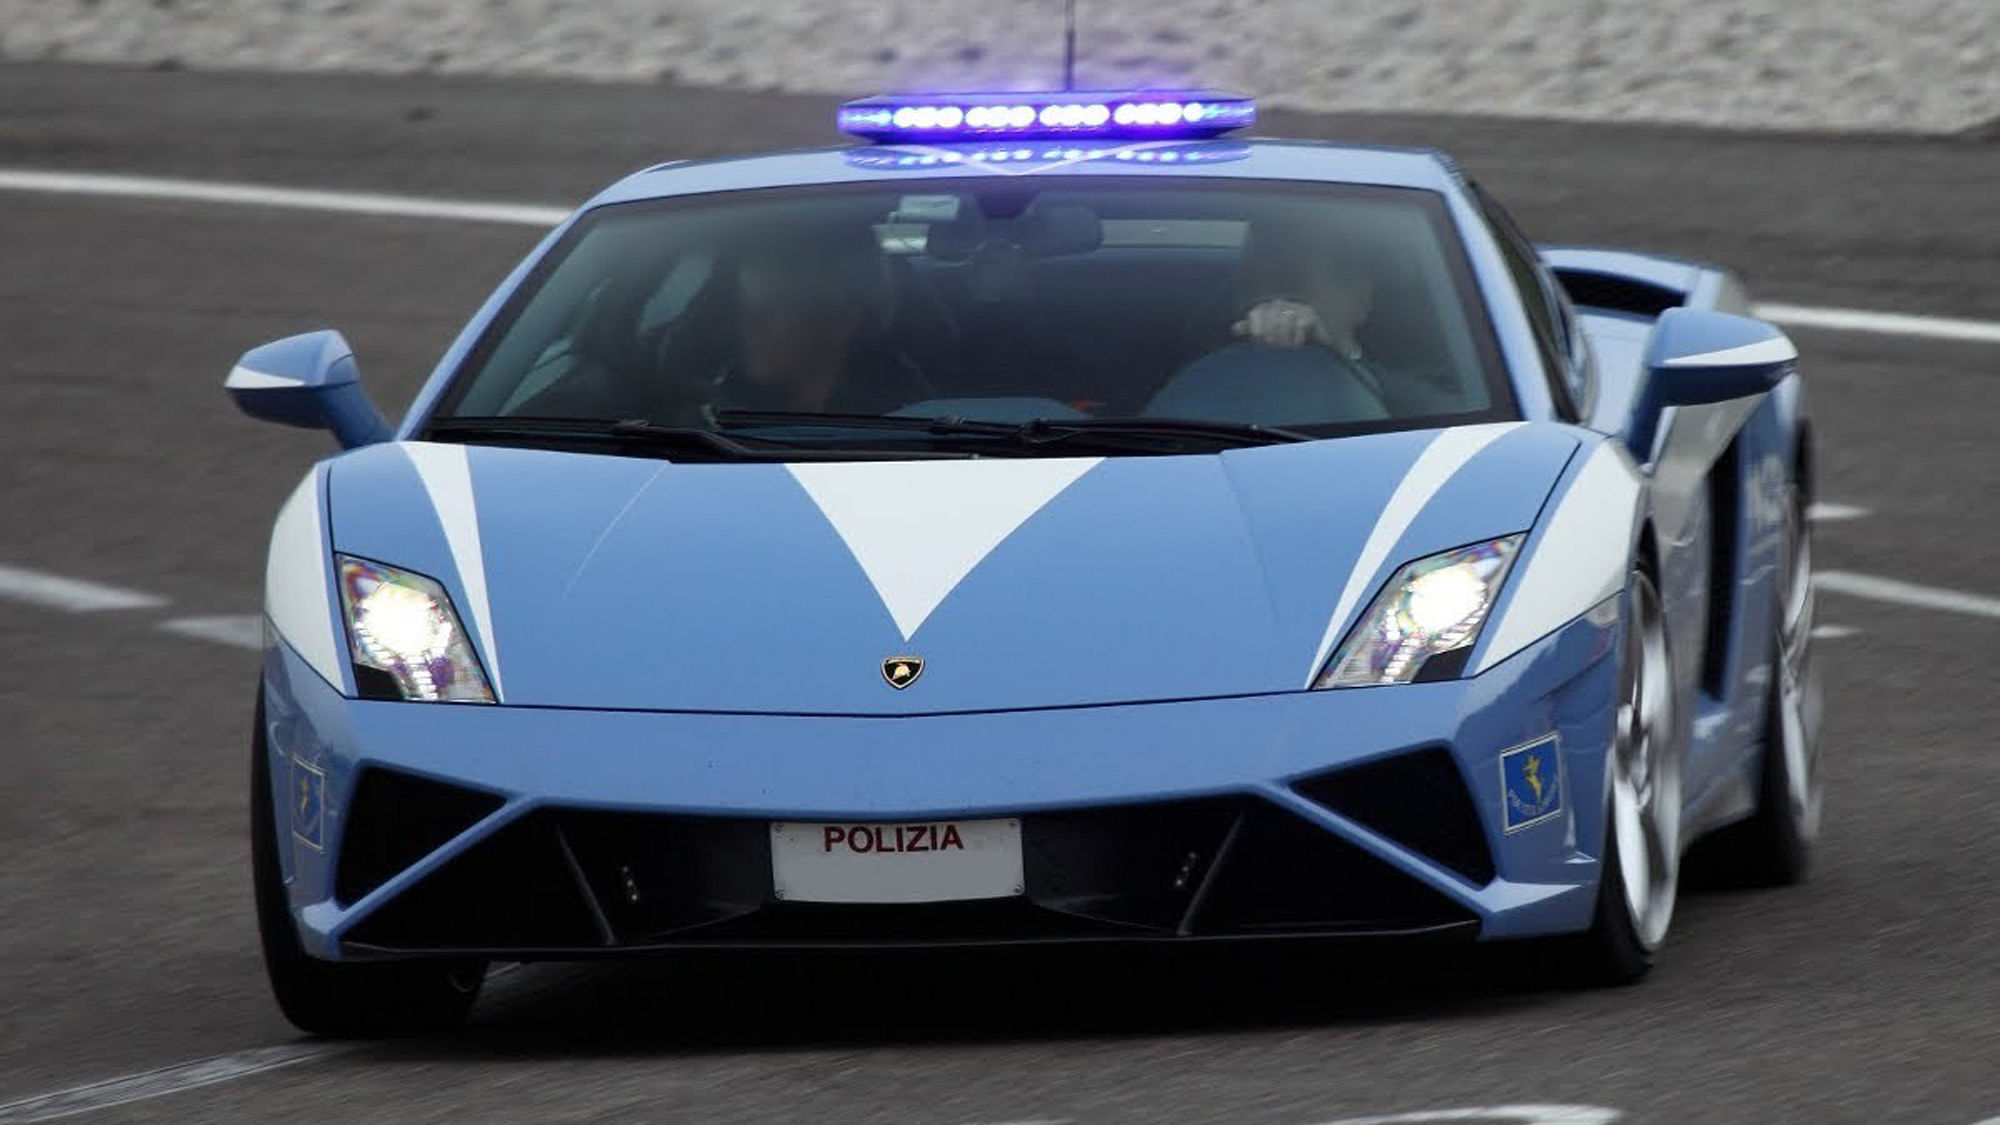 The Lamborghini Huracan used by the Italian police. (Photo: Lamborghini)